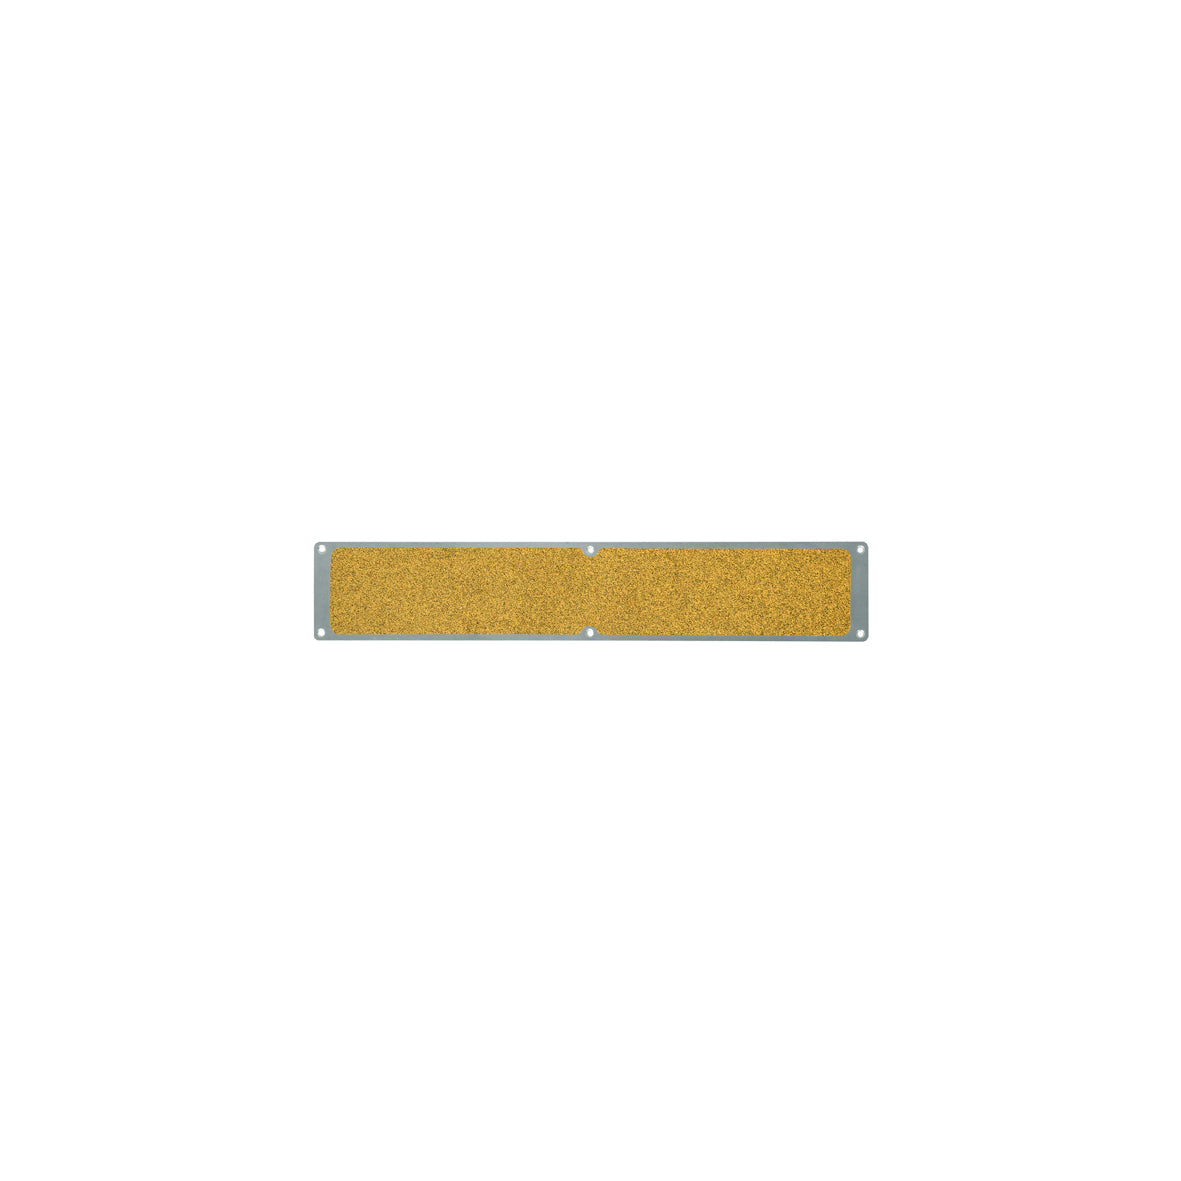 Antirutschplatte Alu Universal, Public 46 gelb 114x1000mm